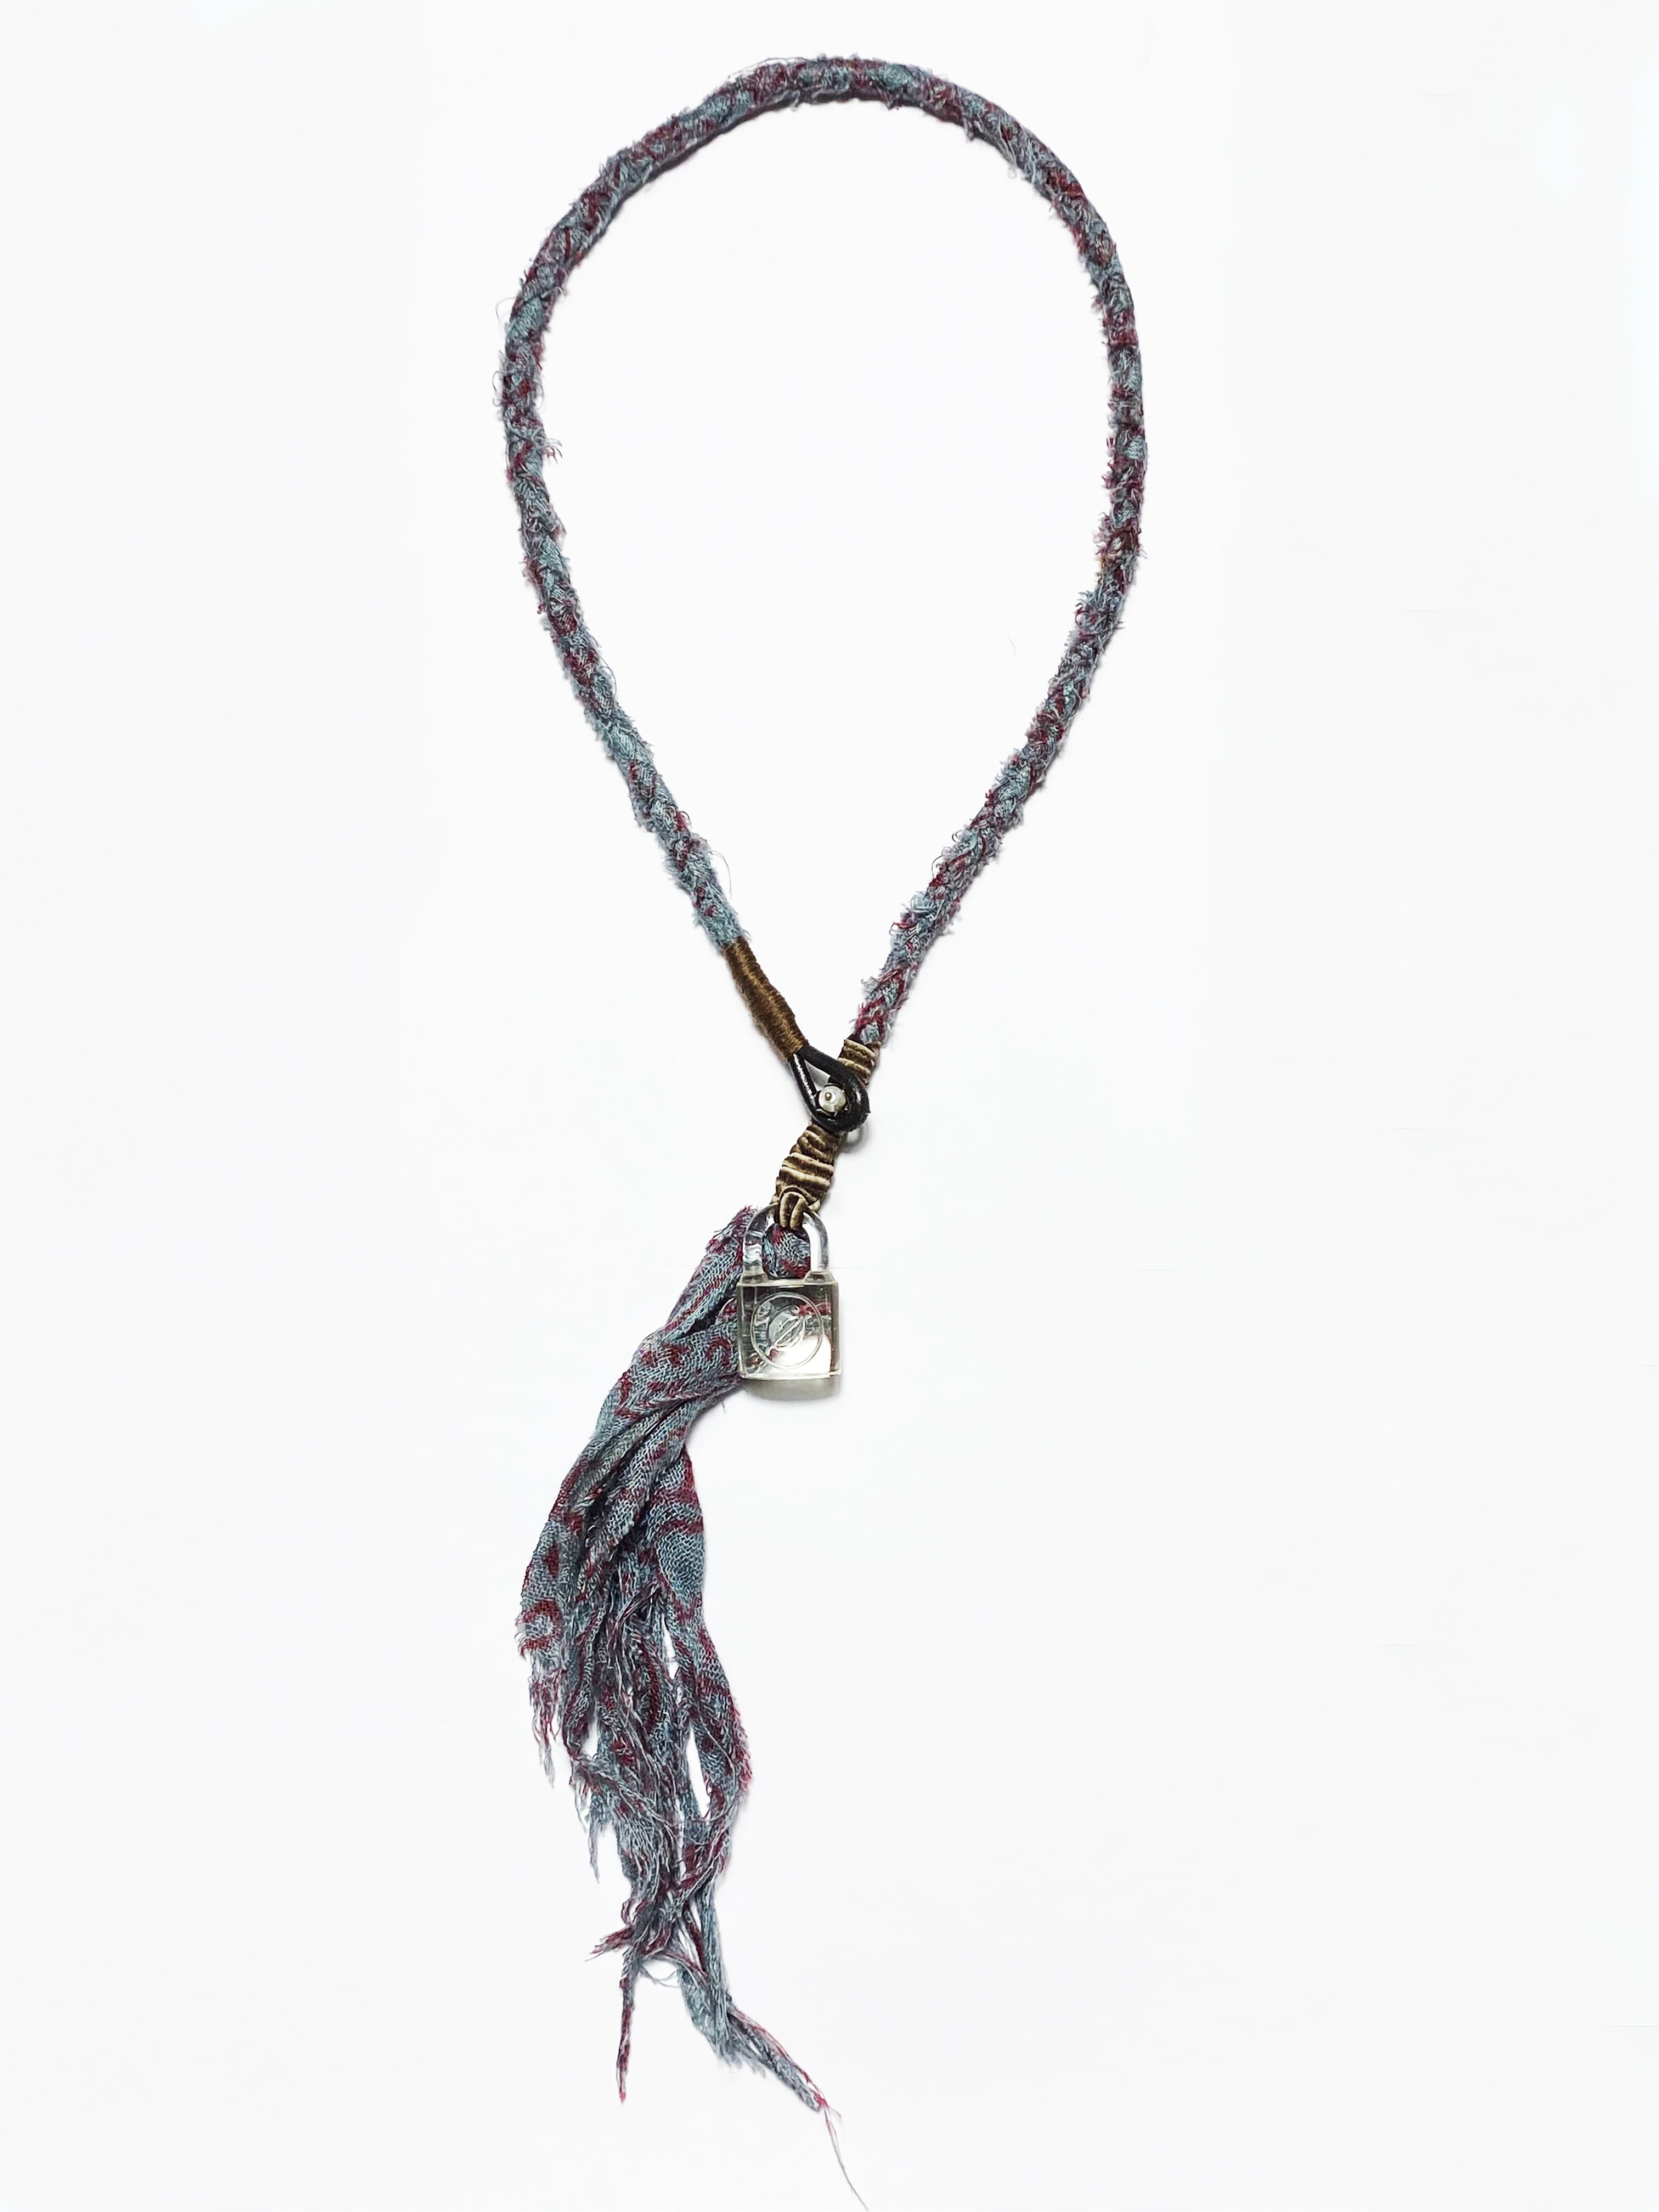 Padlocked Bandana Necklace - Dark blue